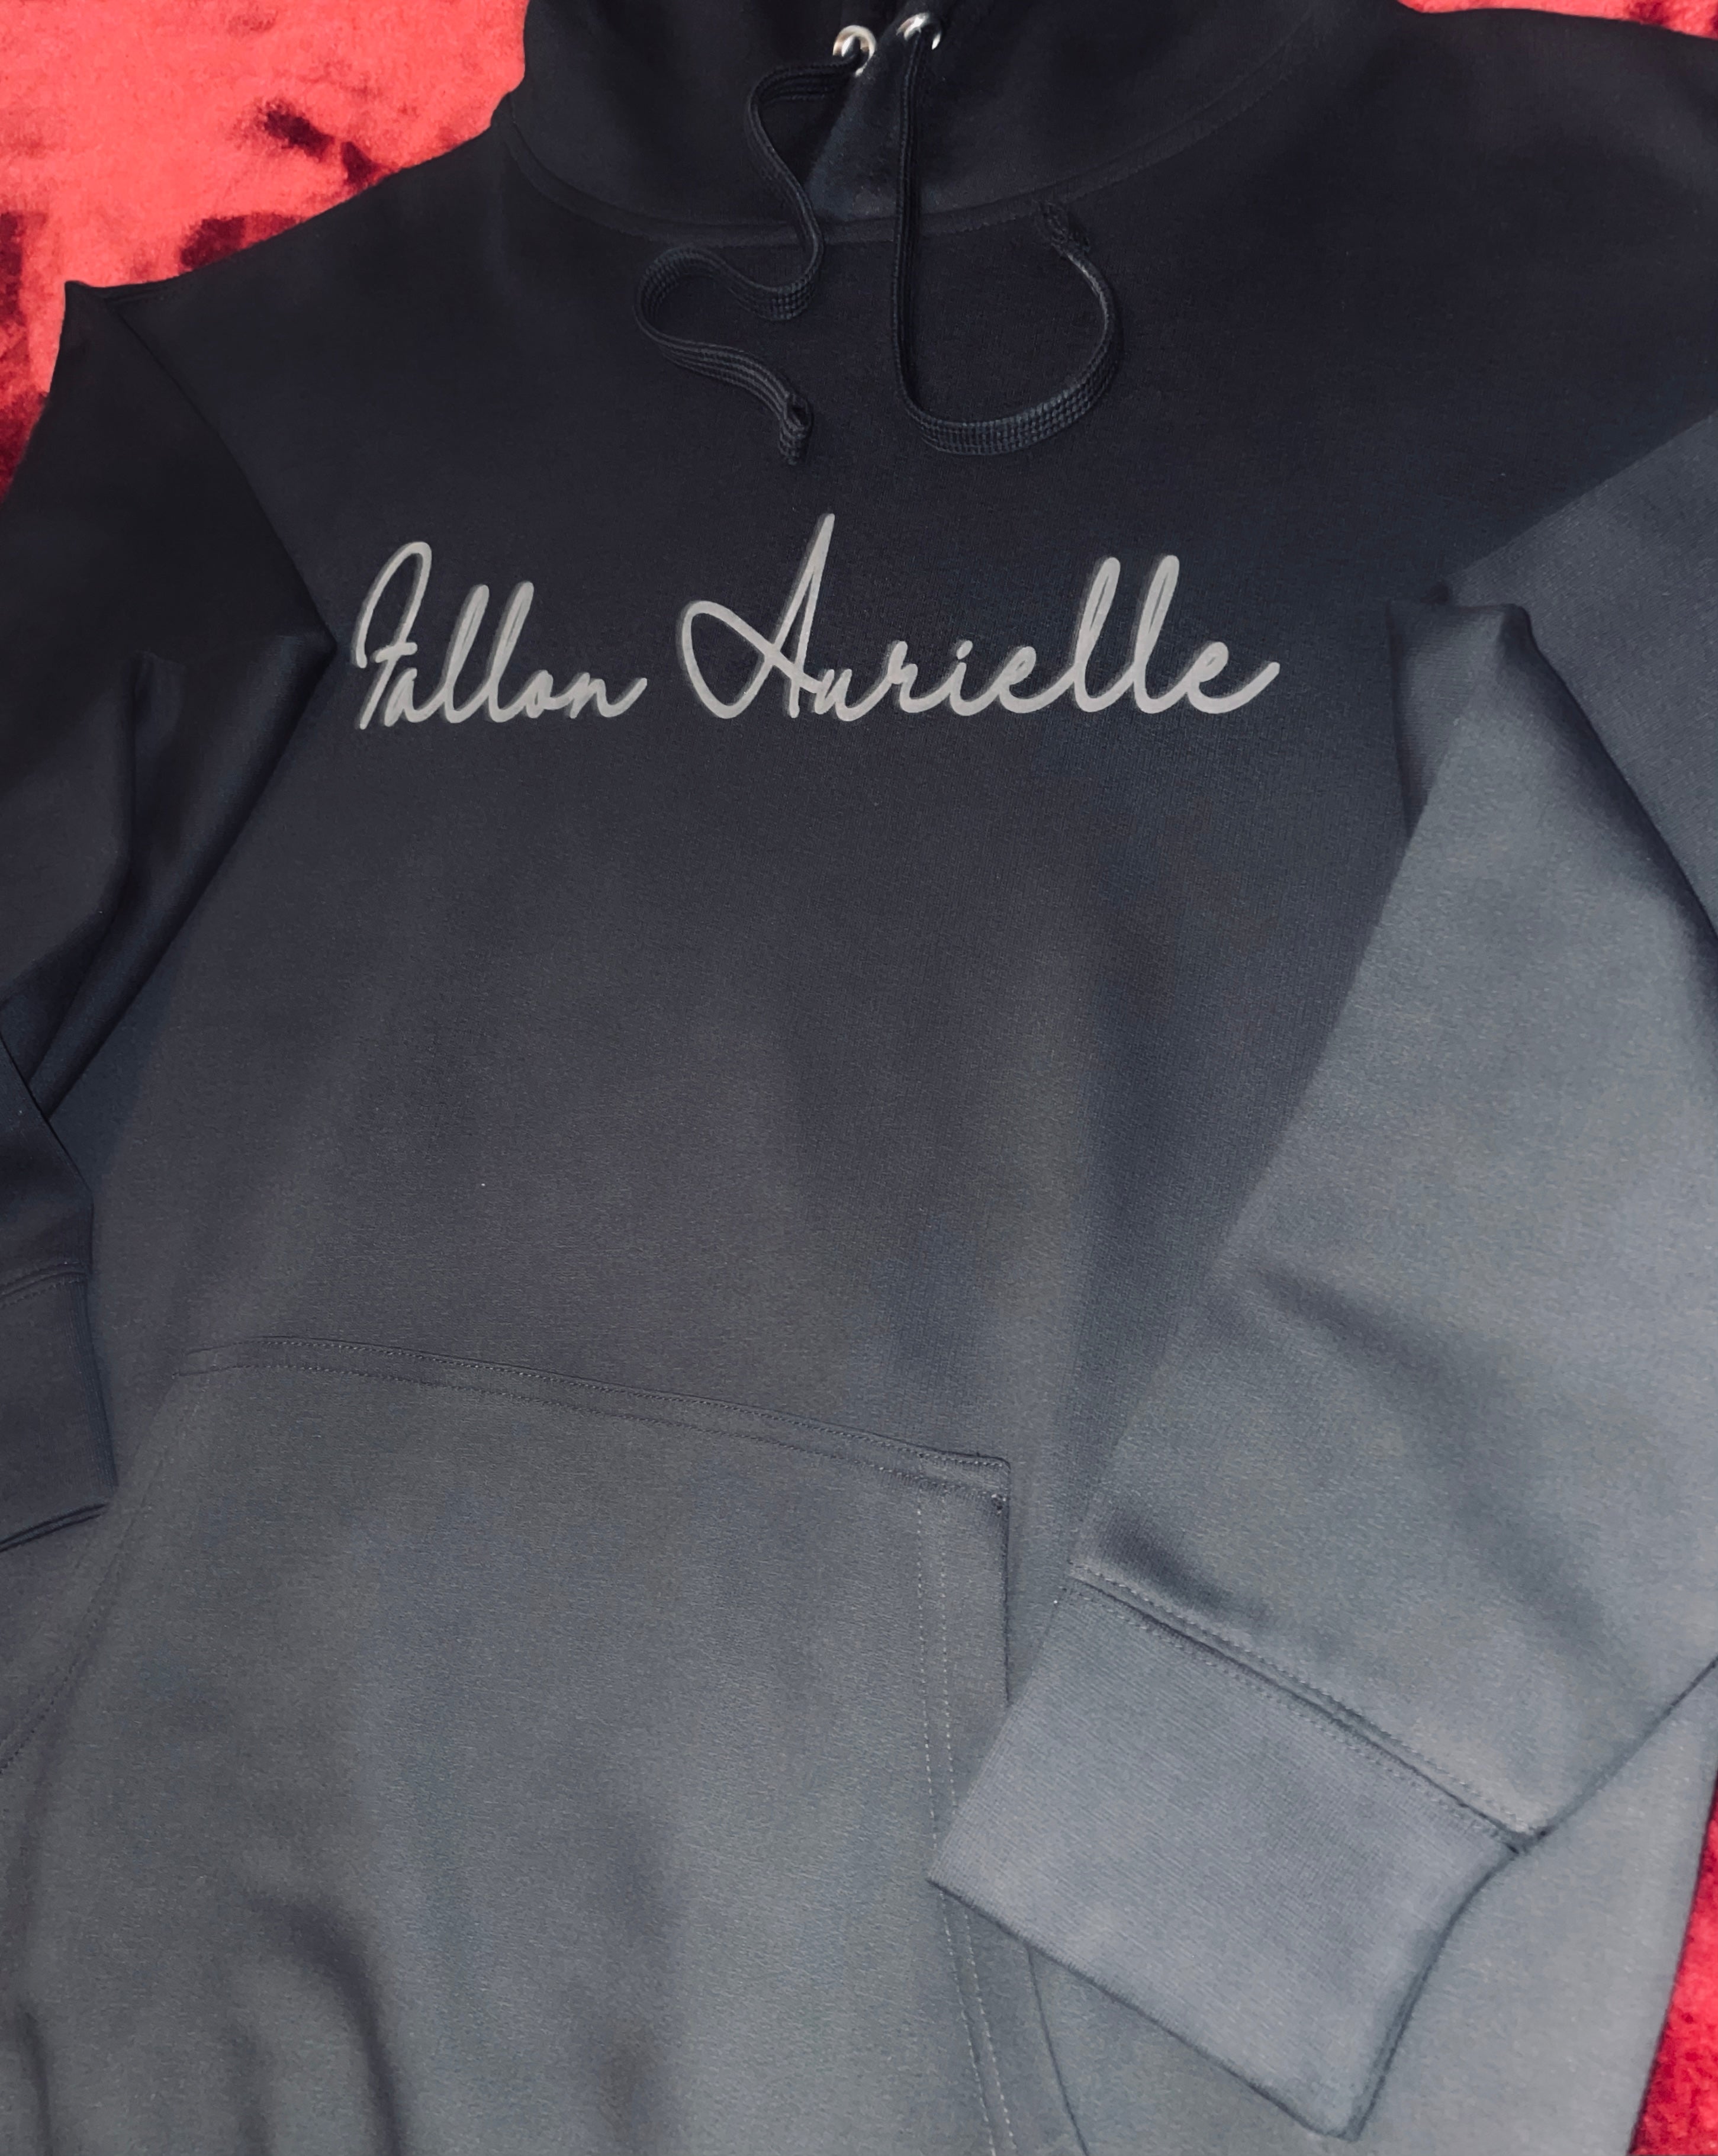 Fallon Aurielle Unisex Signature Hoodie (Black & Charcoal Gray)